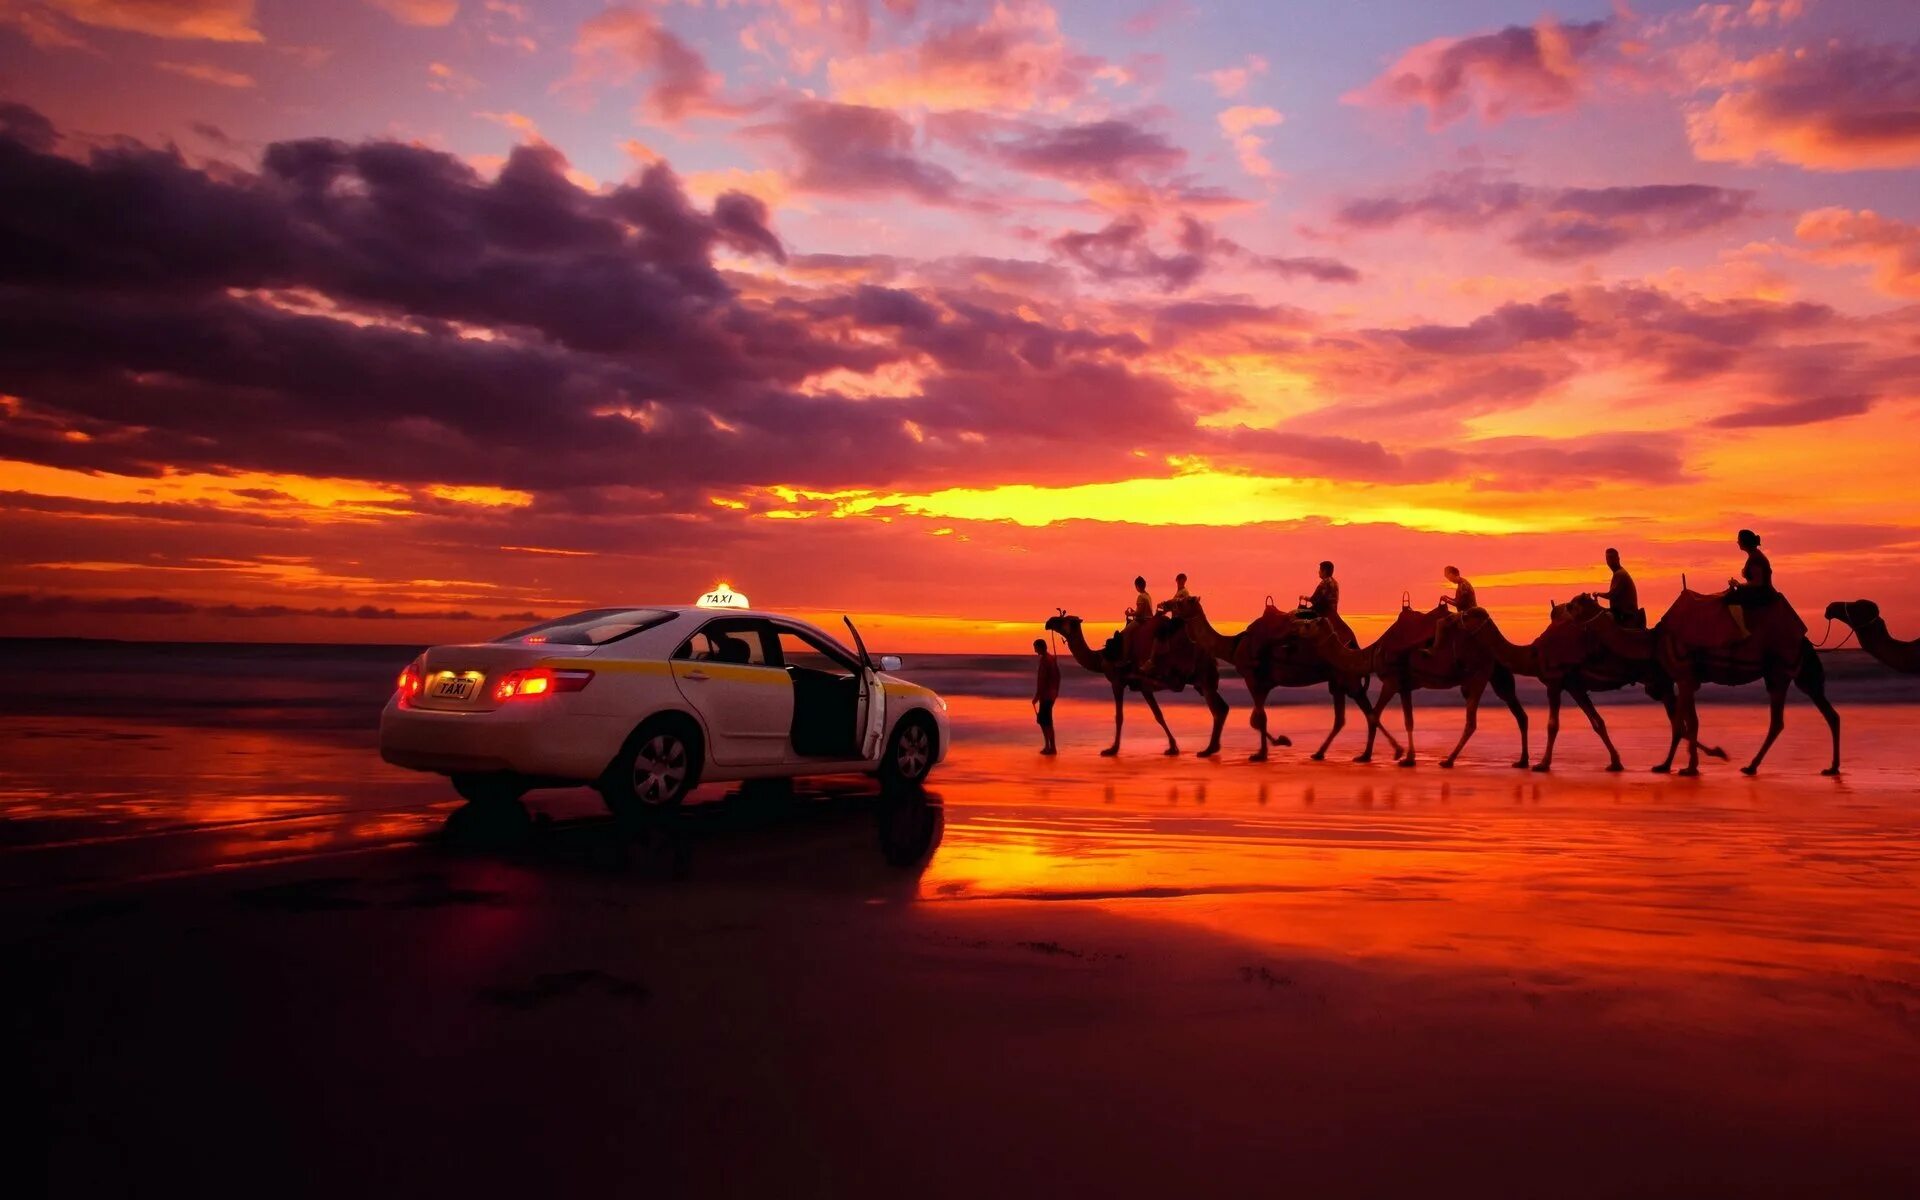 Едет караван. Машина на фоне заката. Верблюд в пустыне. Закат в пустыне. Караван на закате.